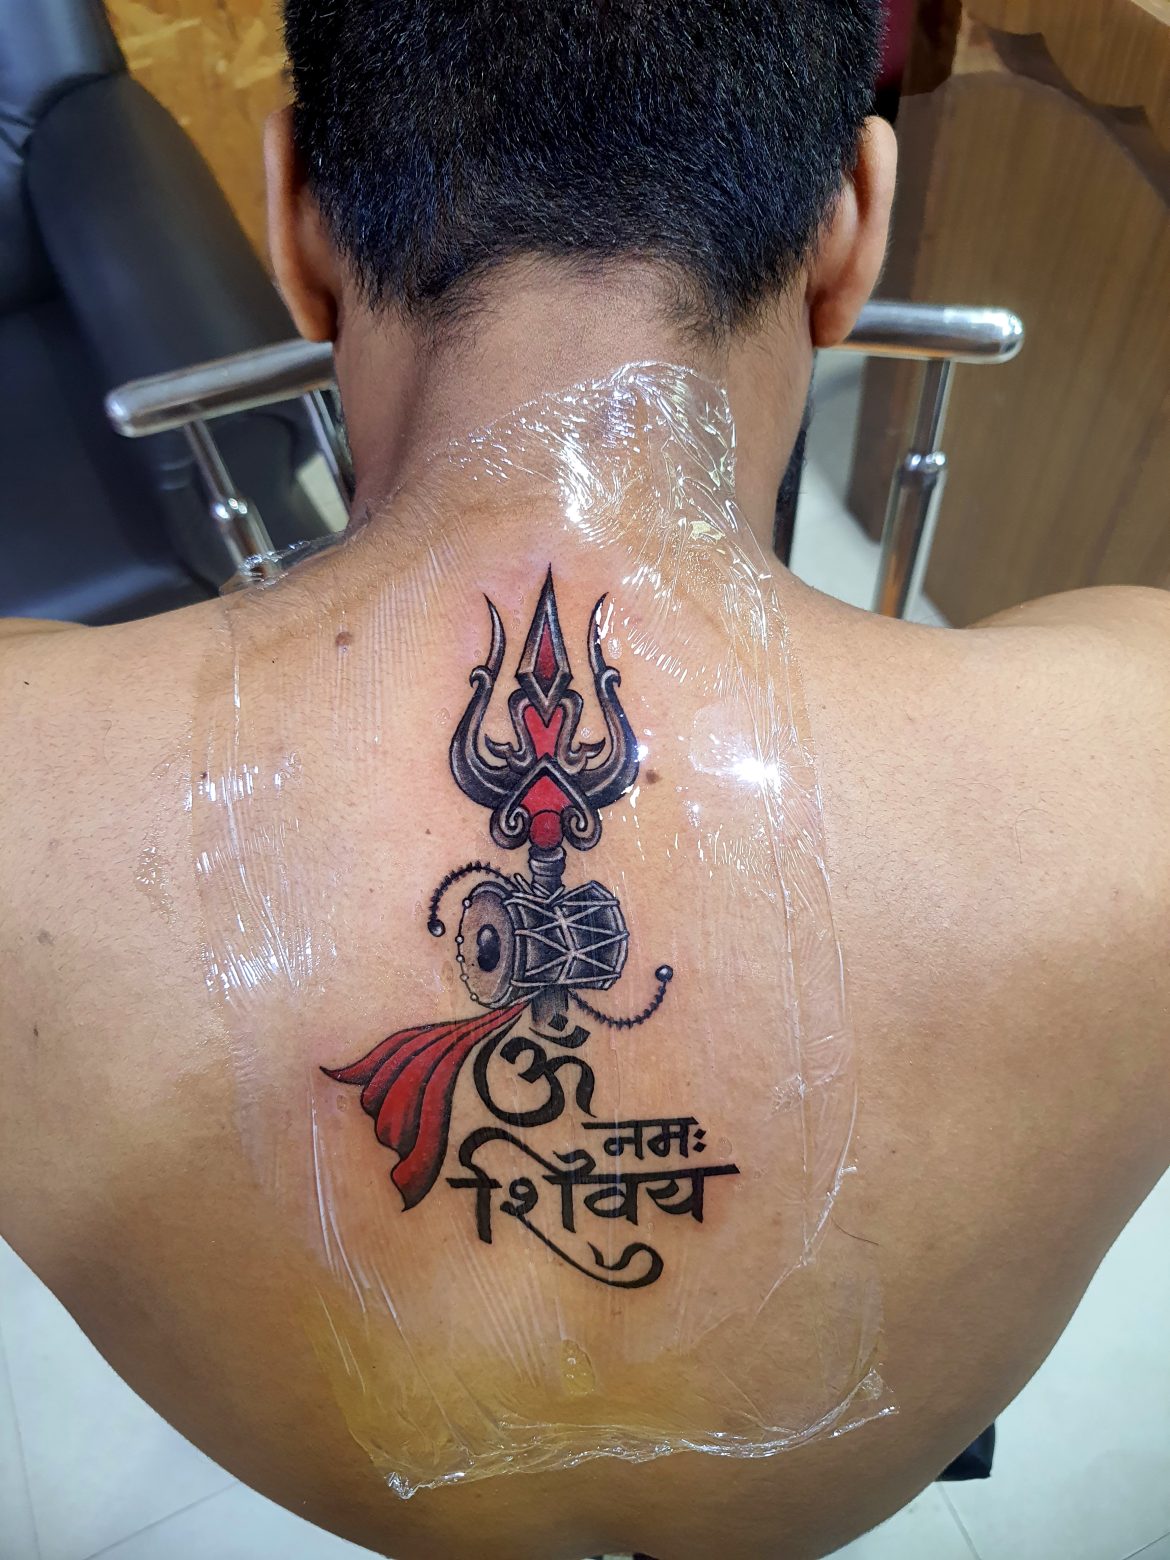 Shiva Ink Sting in Nagashetti Koppa,Hubli - Best Tattoo Artists in Hubli -  Justdial